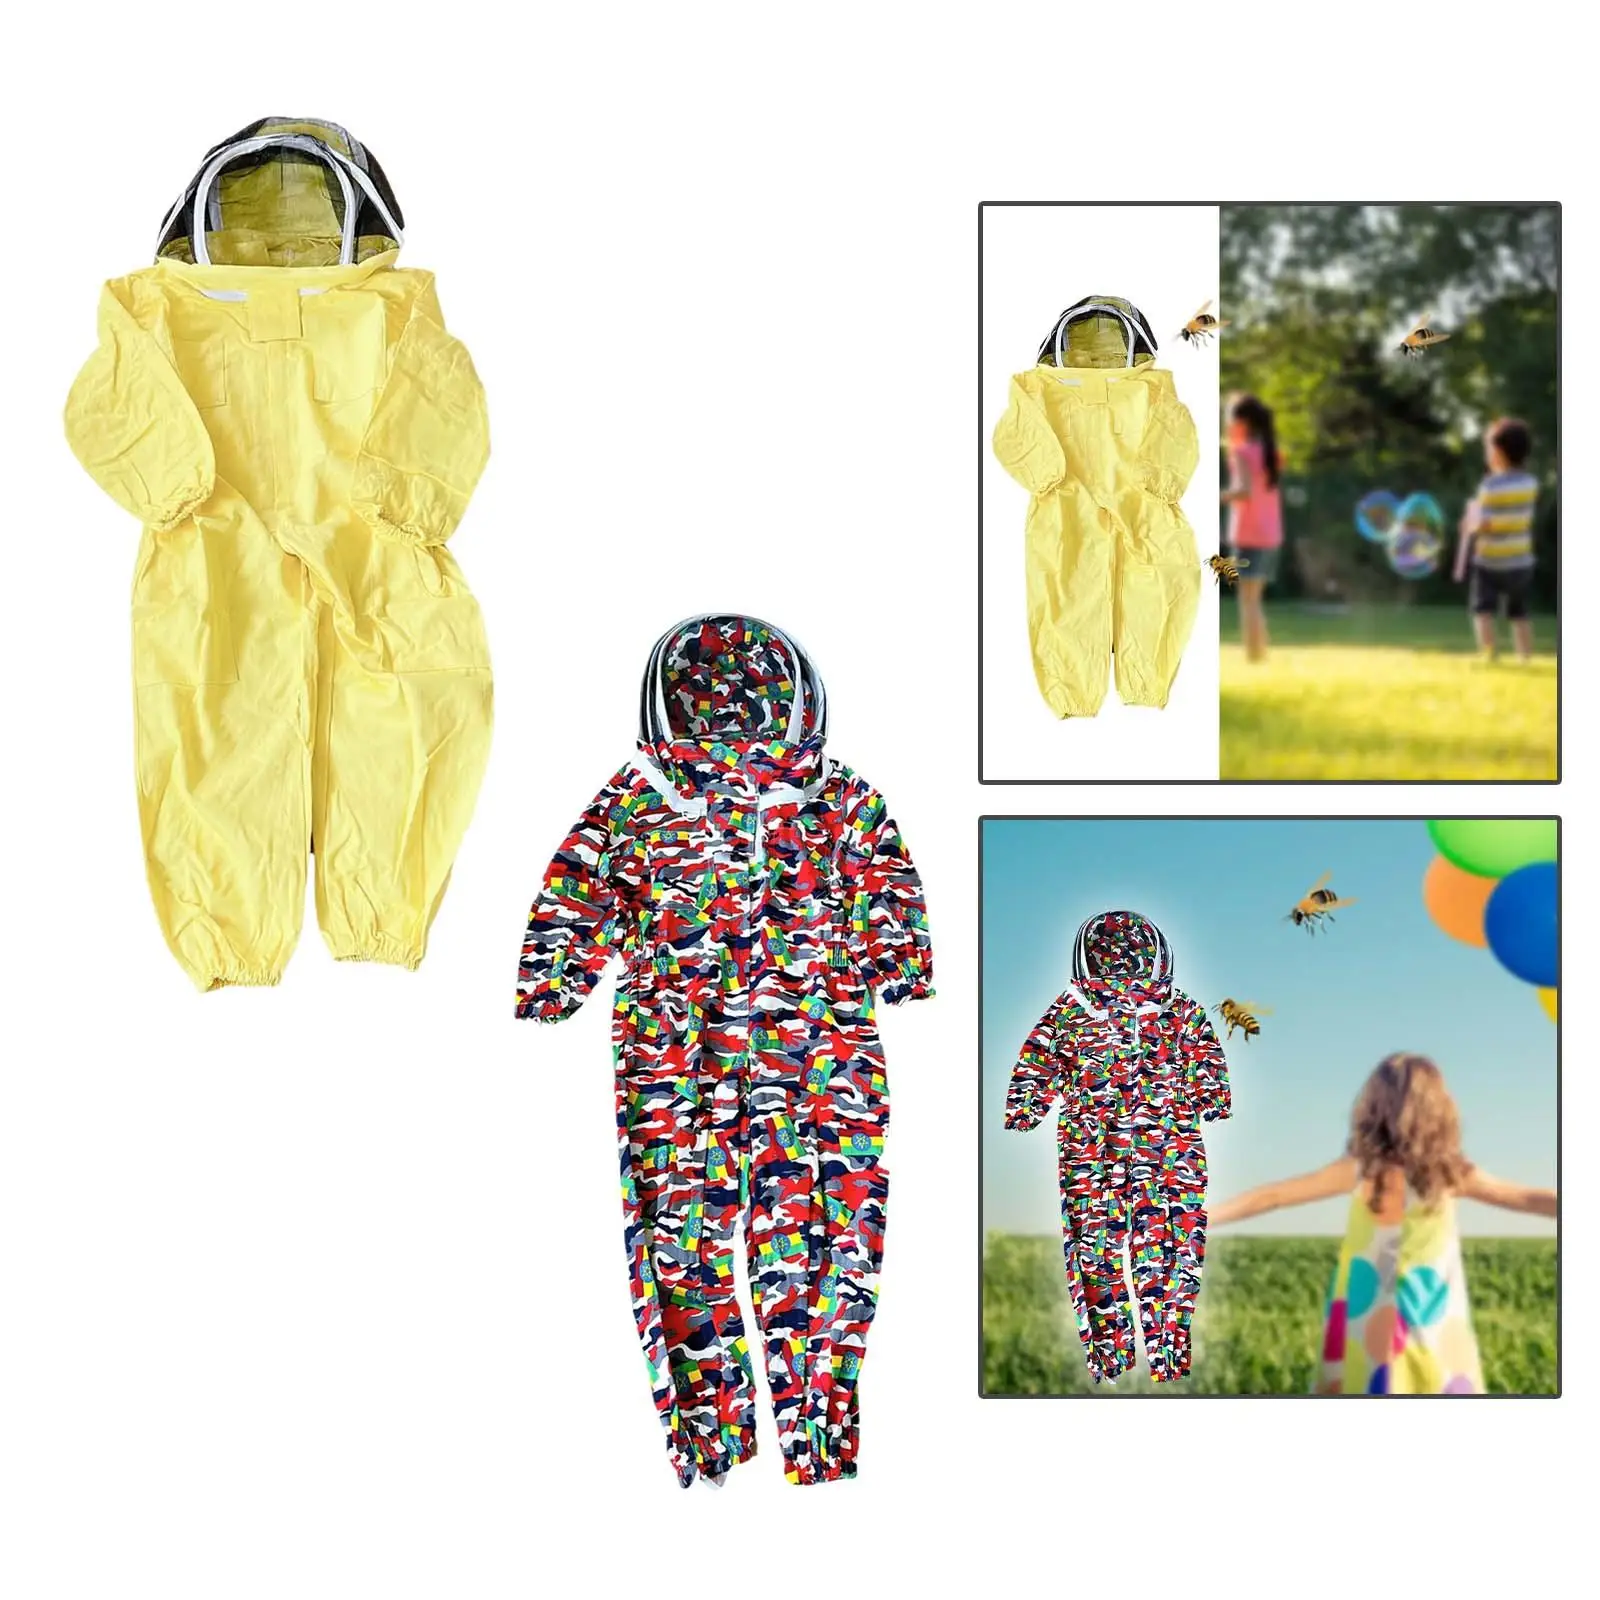 Kids Beekeeper Suit Beekeeping Protective Suit Anti Bee Comfortable with Ventilated Fencing Veil Hood Cotton for Children Girls